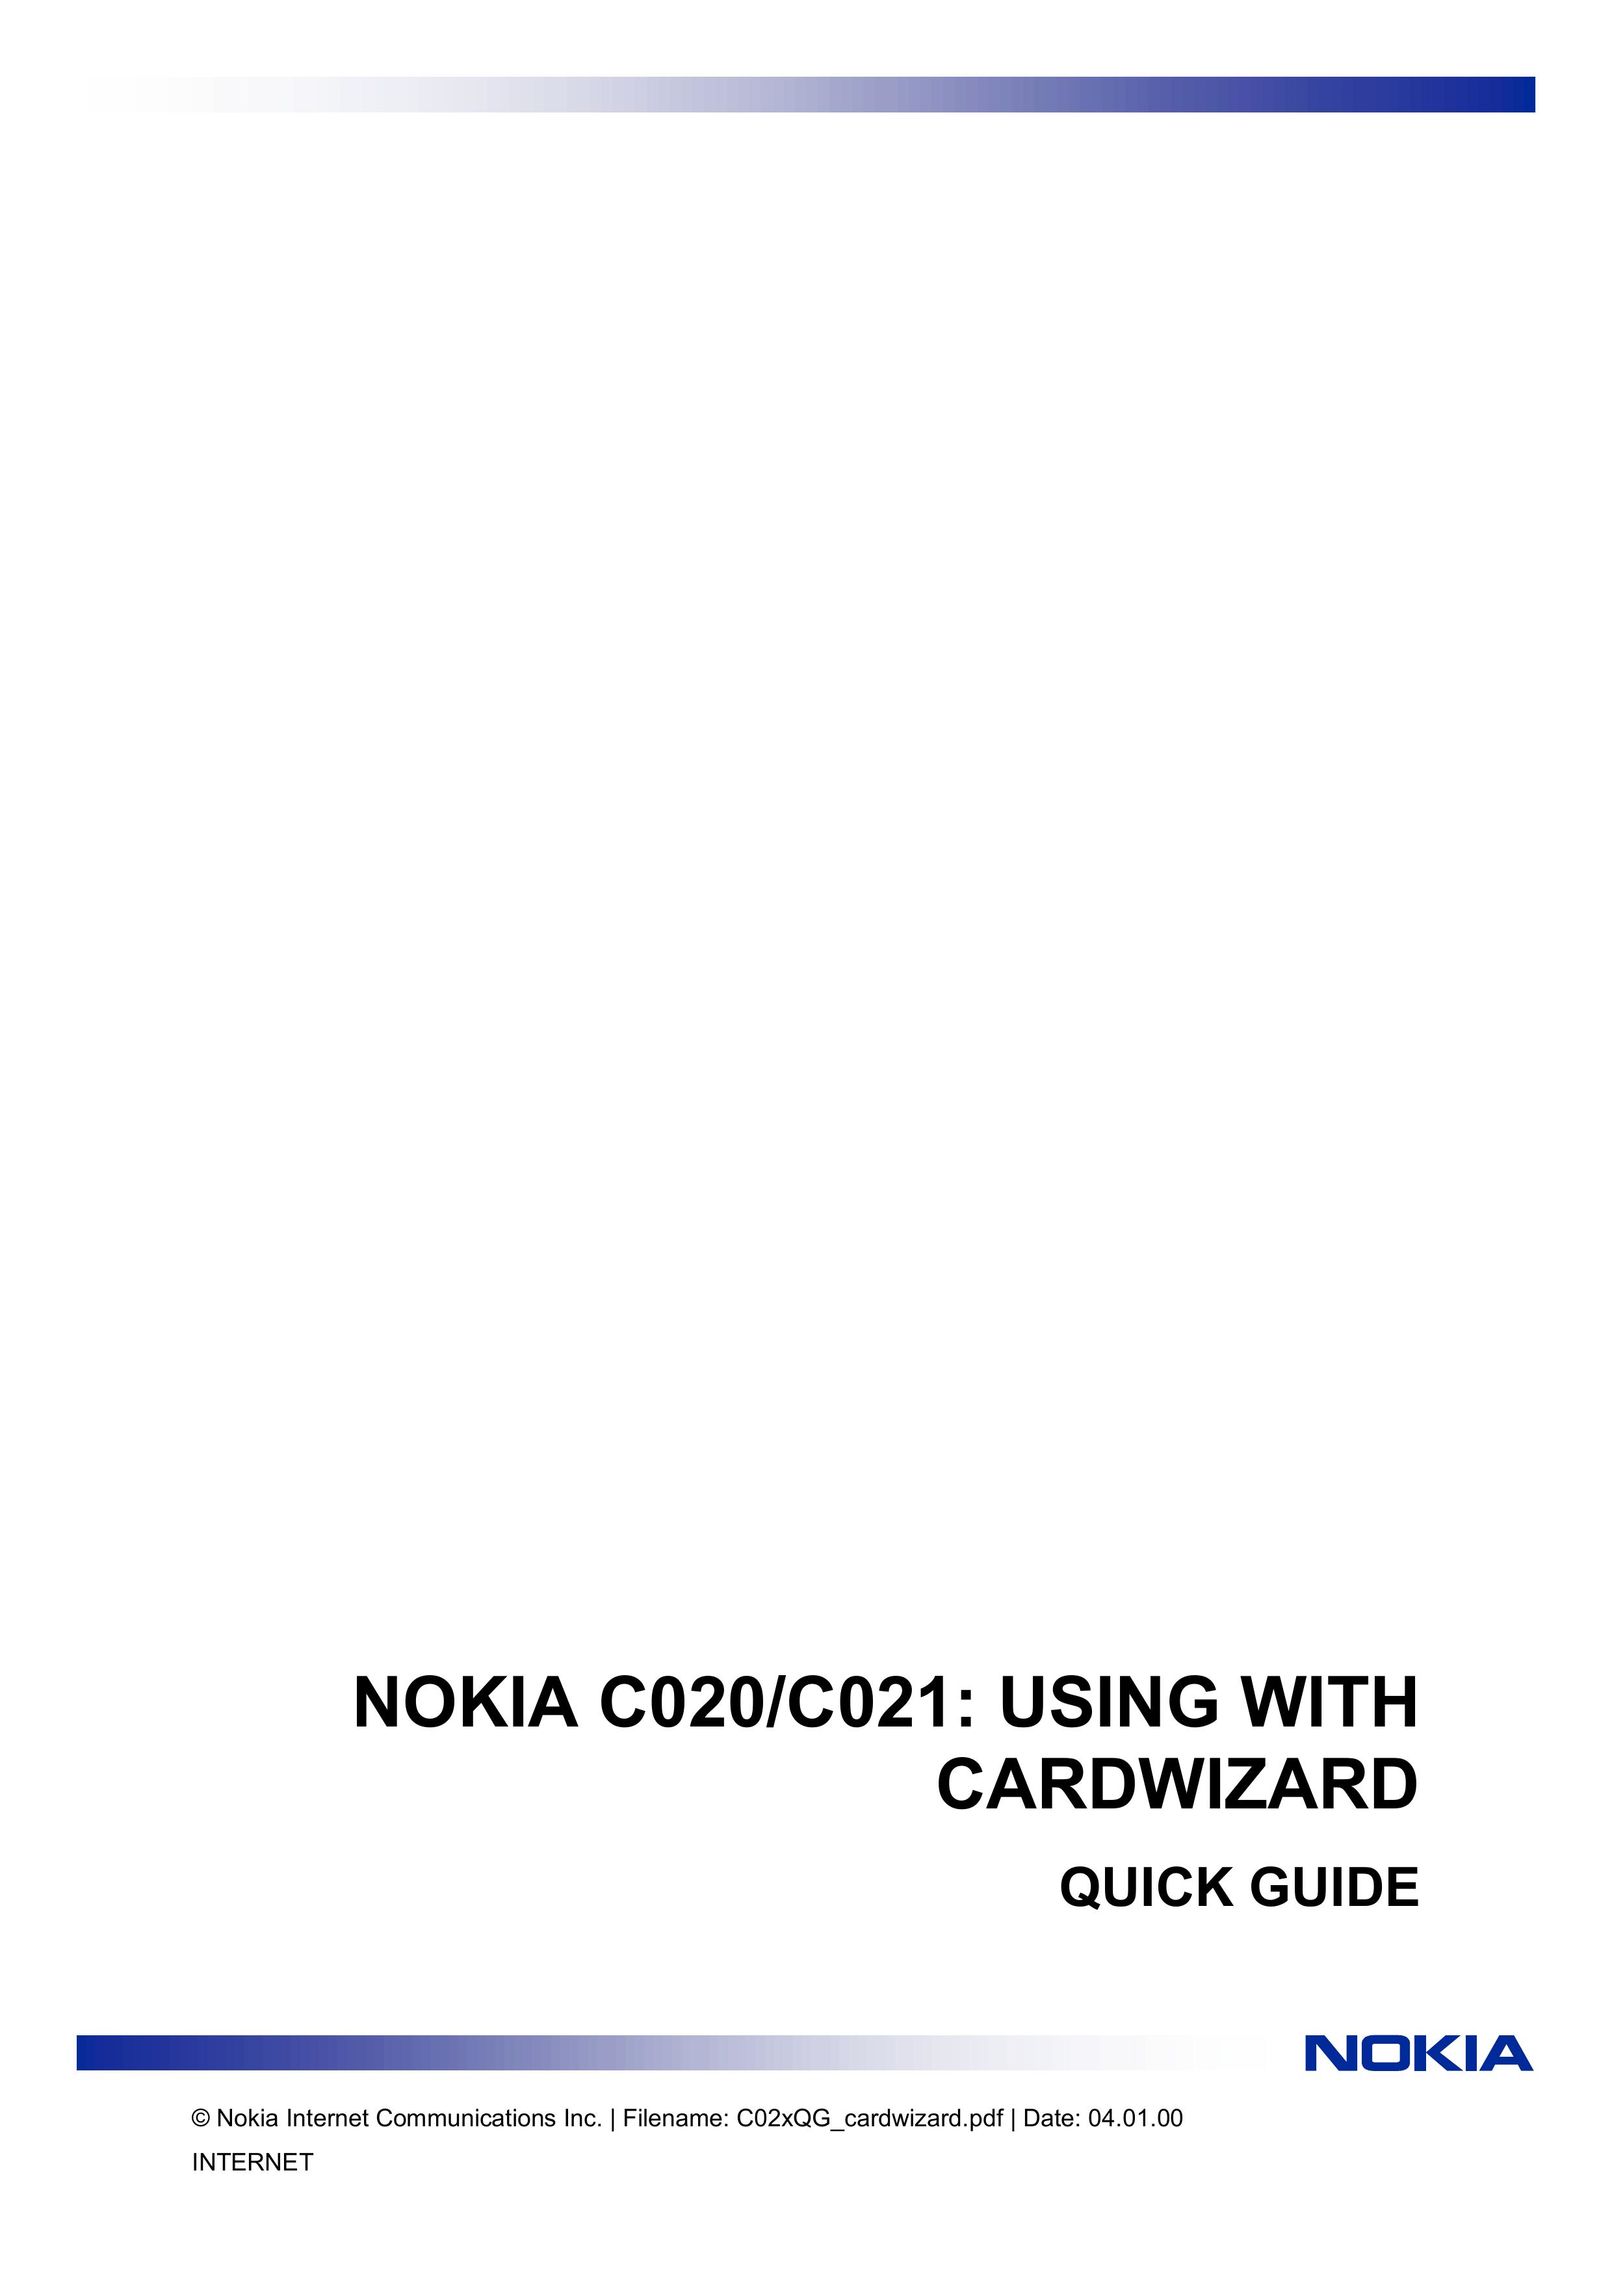 Nokia C020 Card Game User Manual